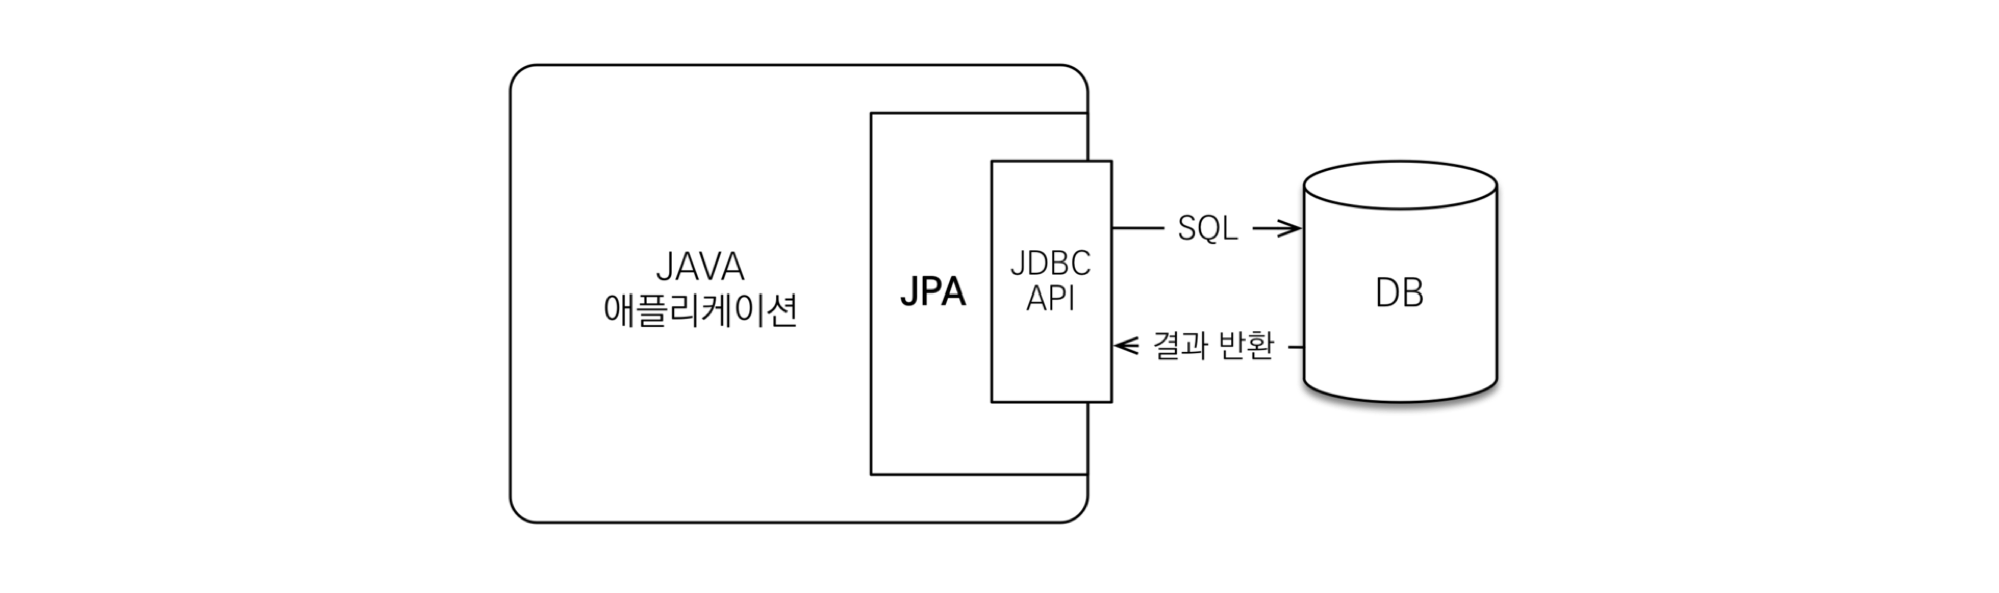 jpa-basic-structure